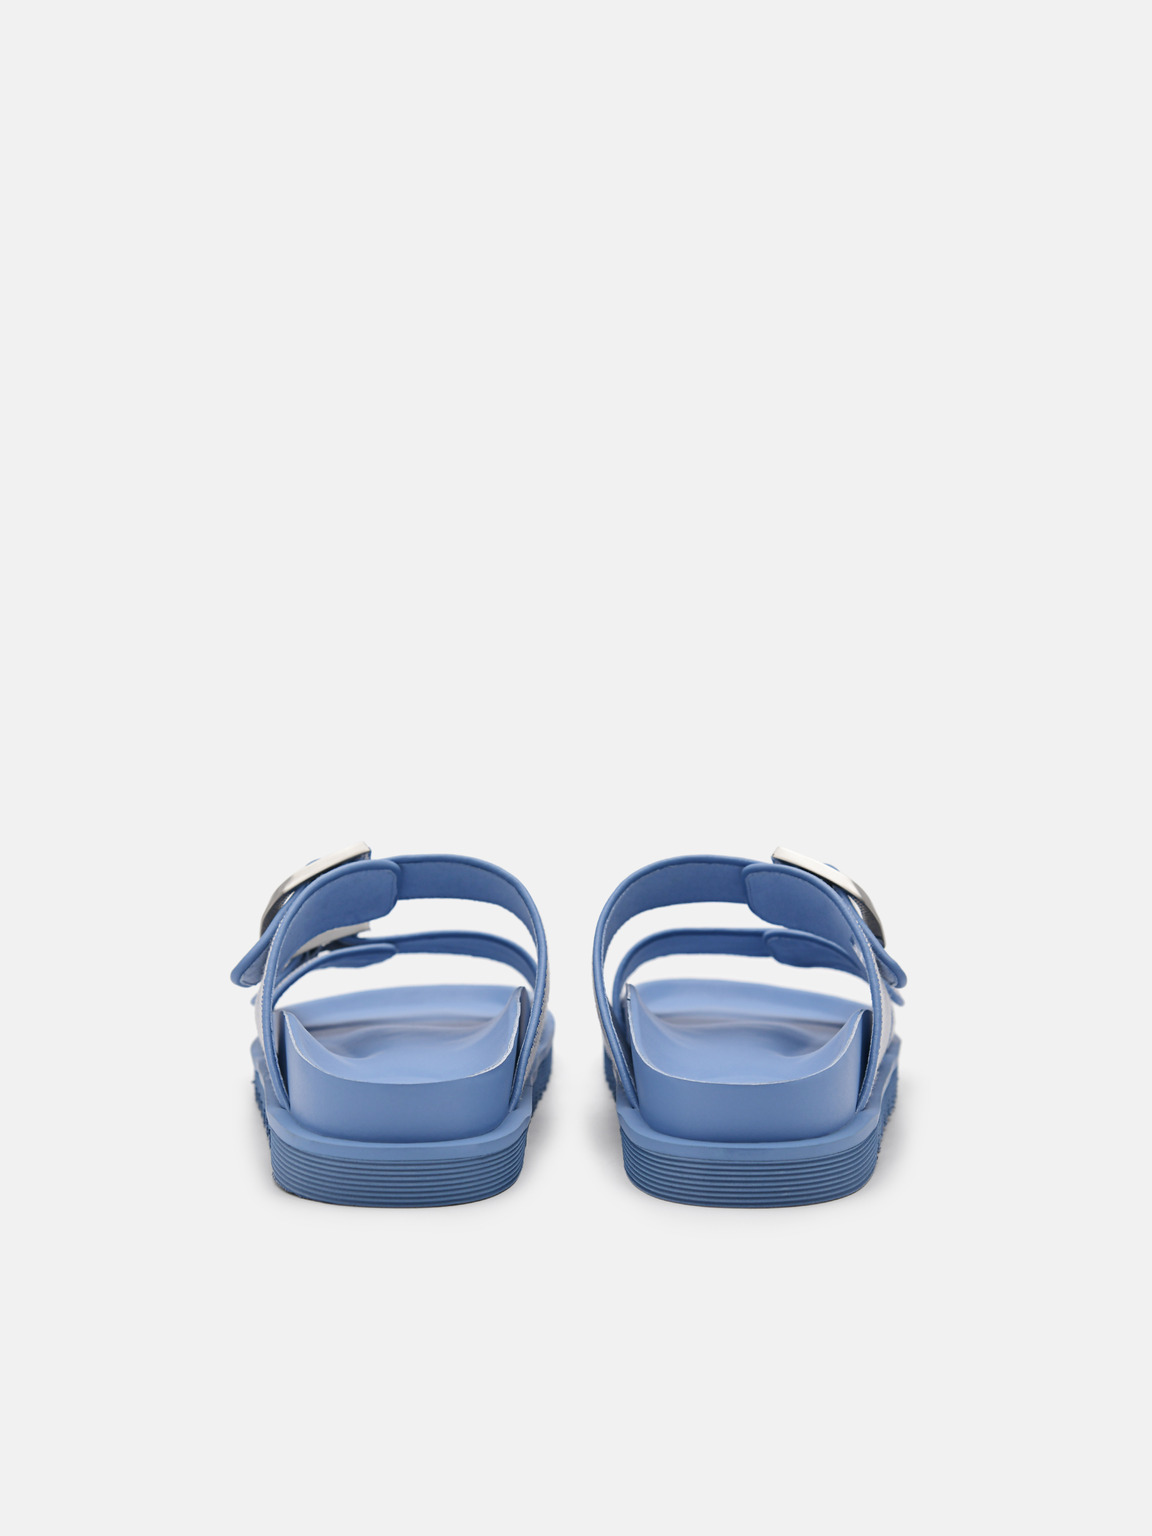 Women's Helix Sandals, Blue